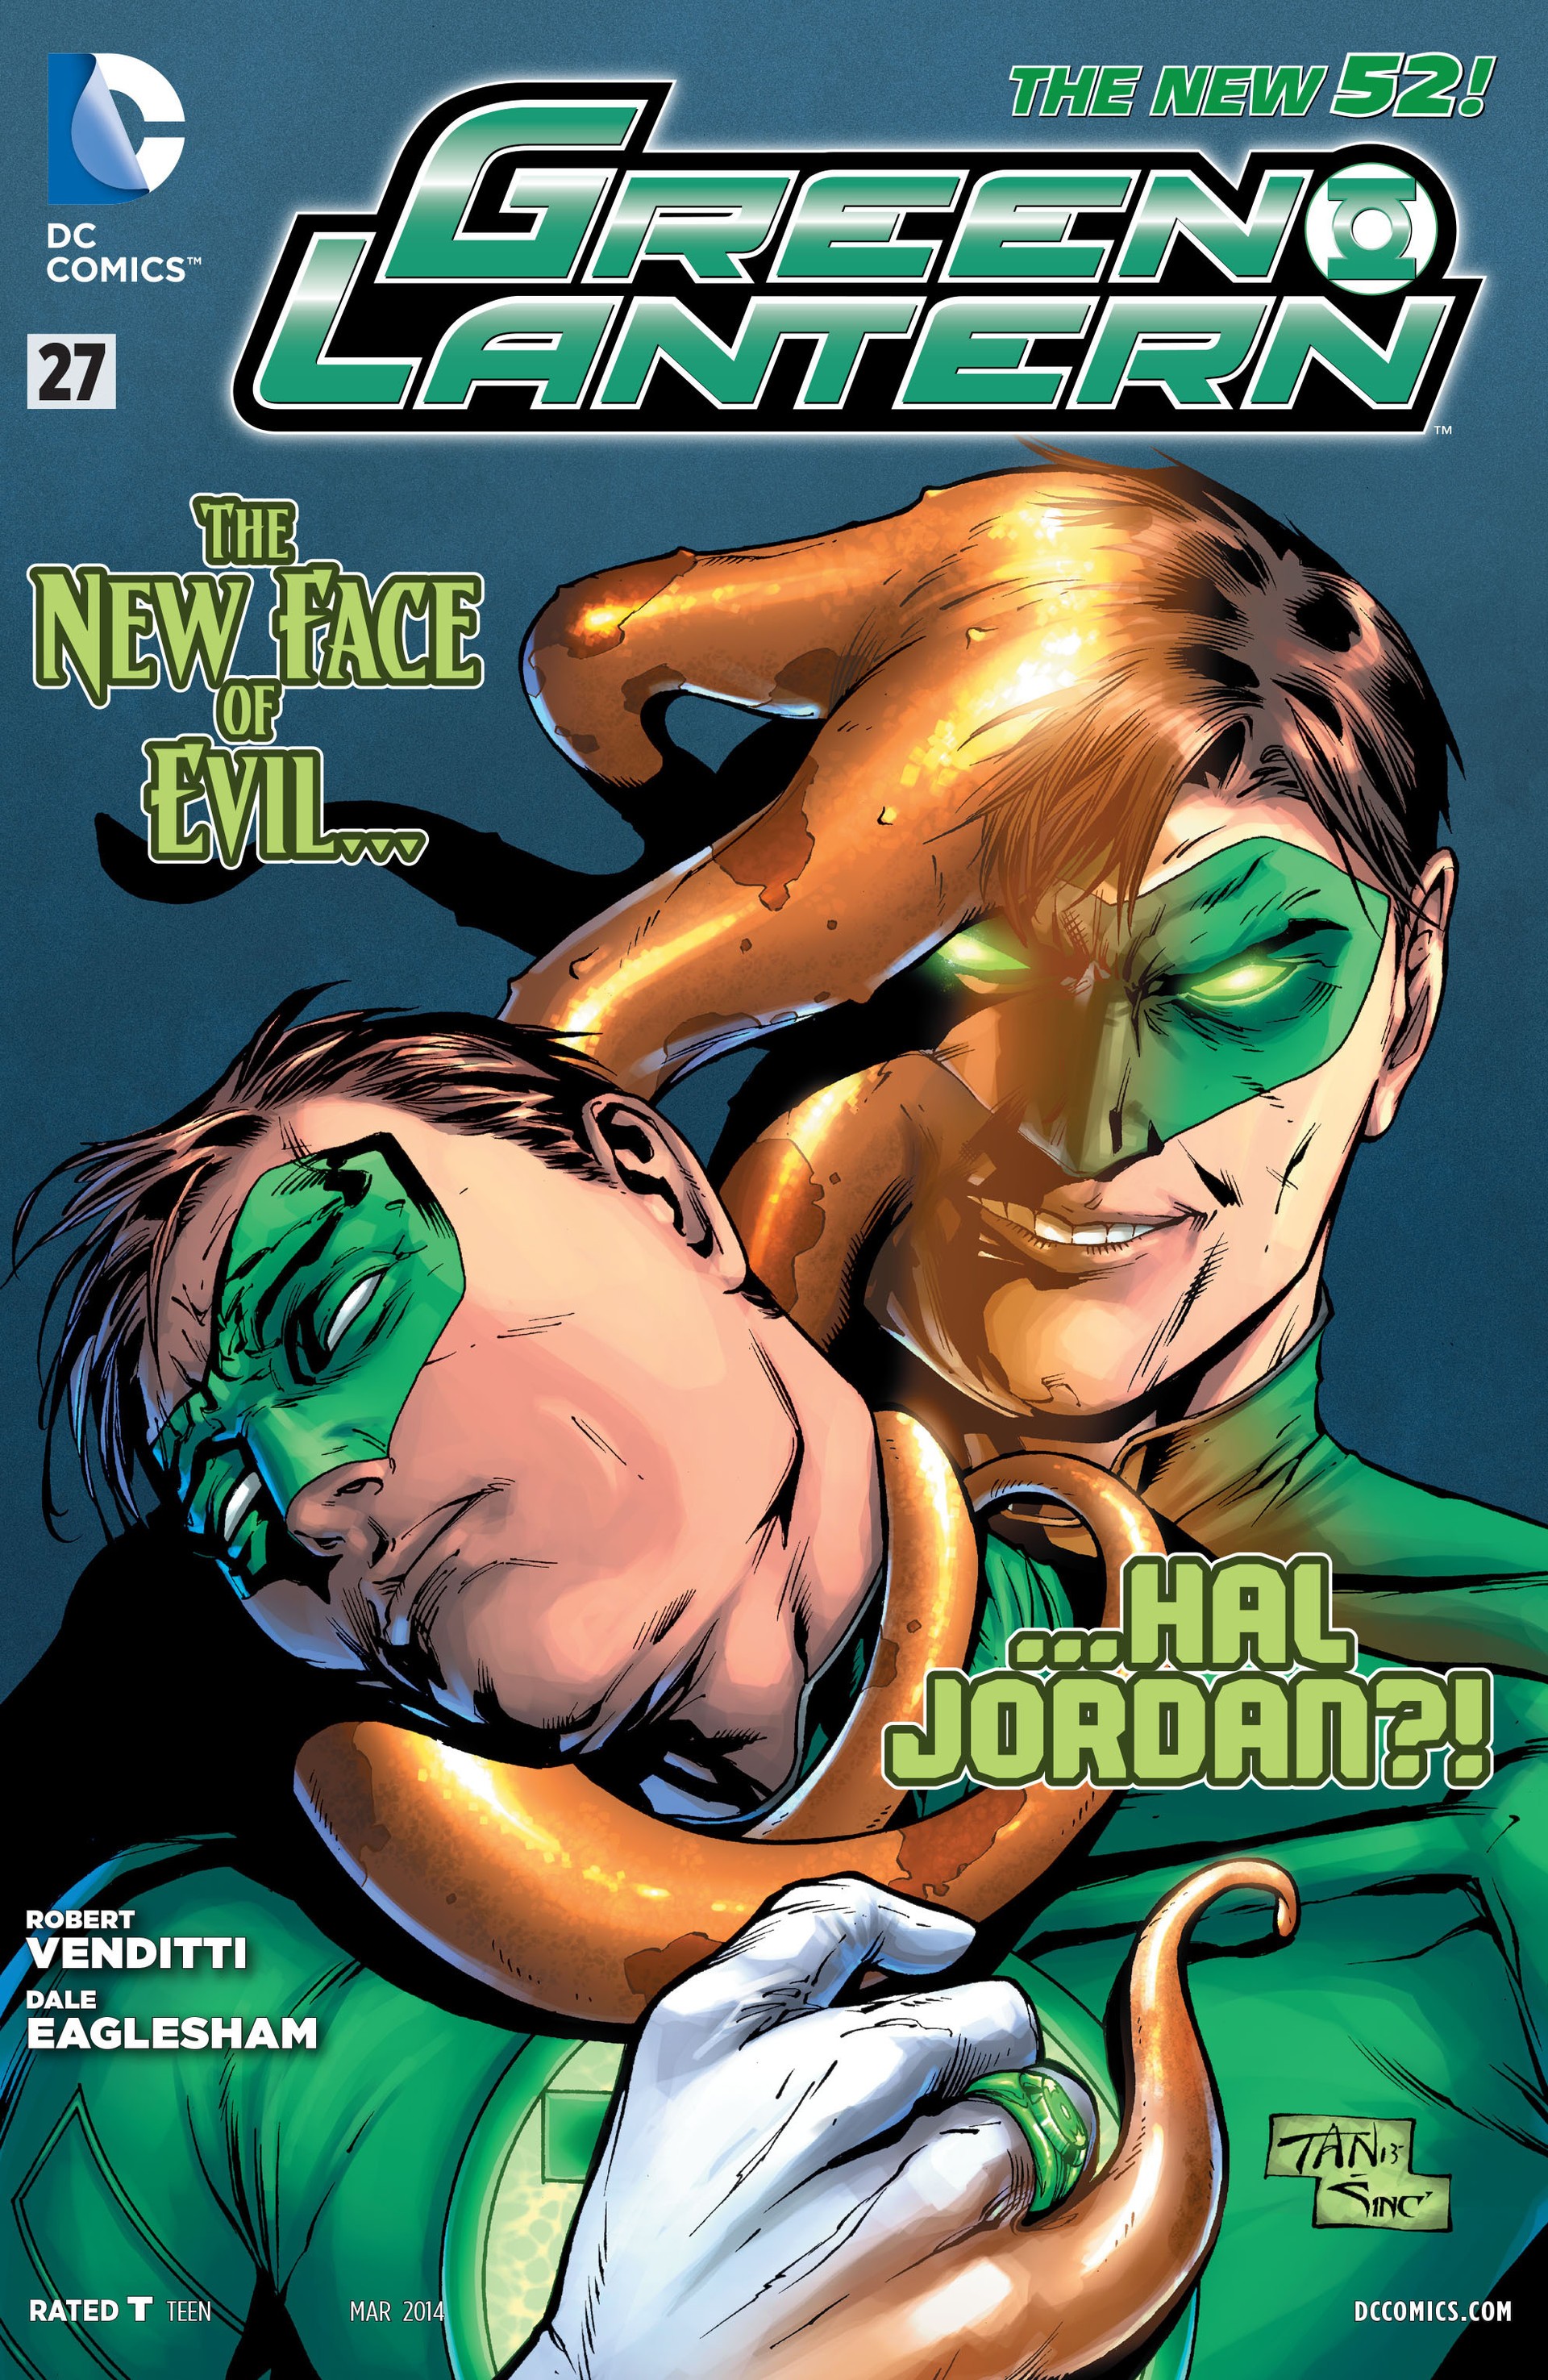 Green Lantern Vol. 5 #27